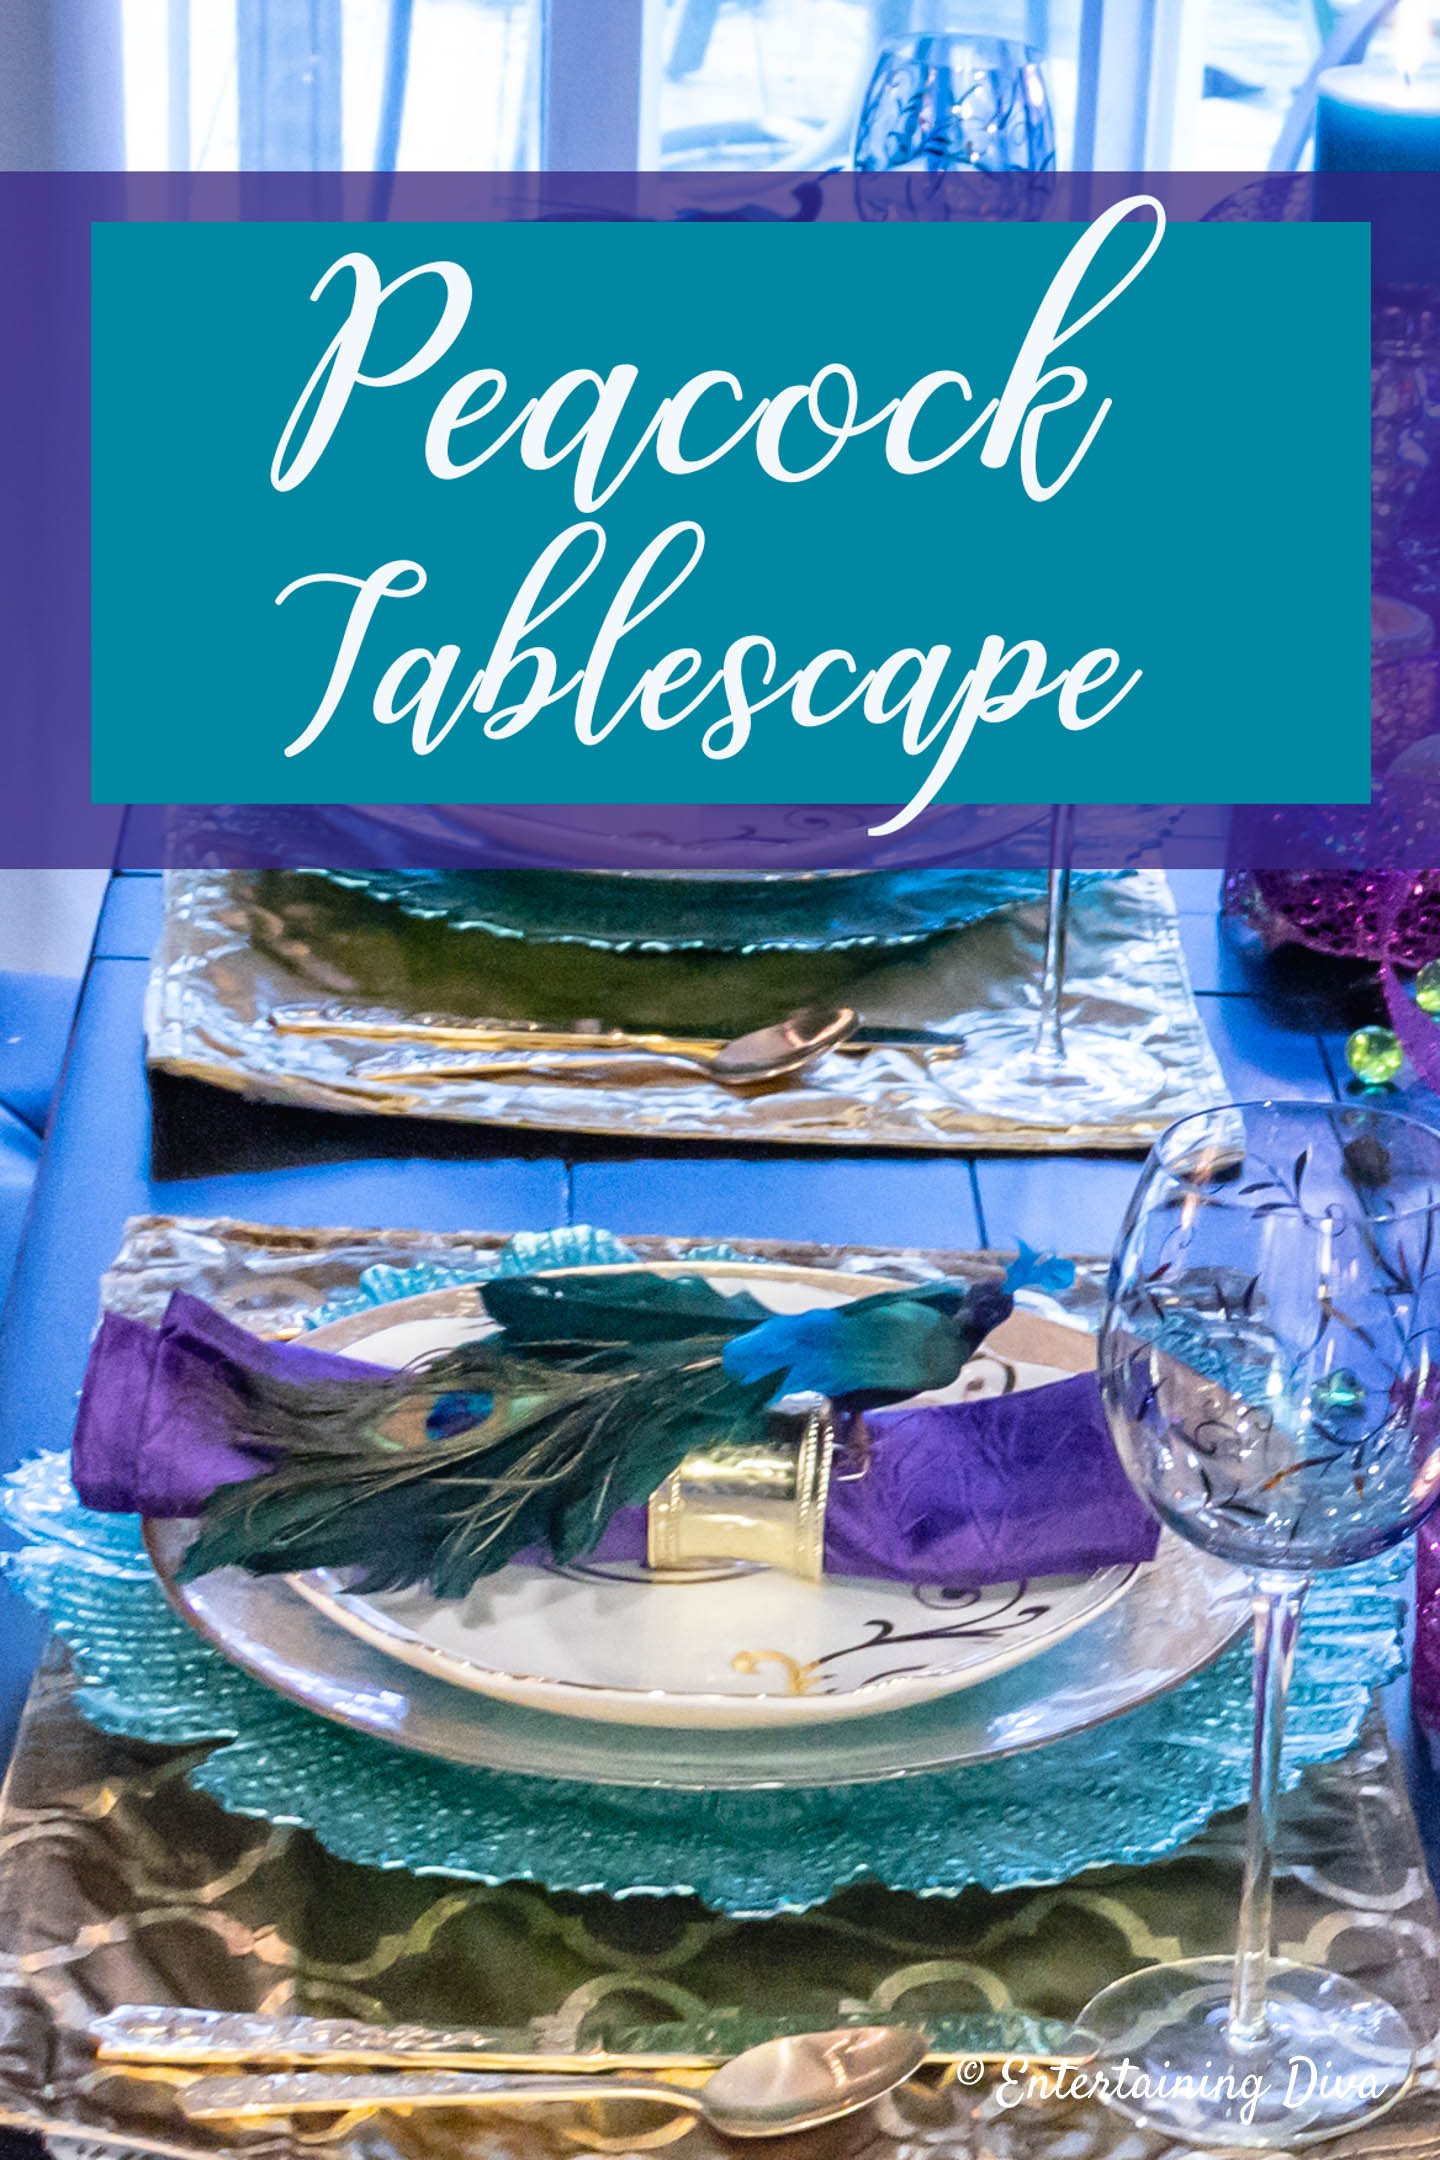 Peacock tablescape: A Mardi Gras Table Setting